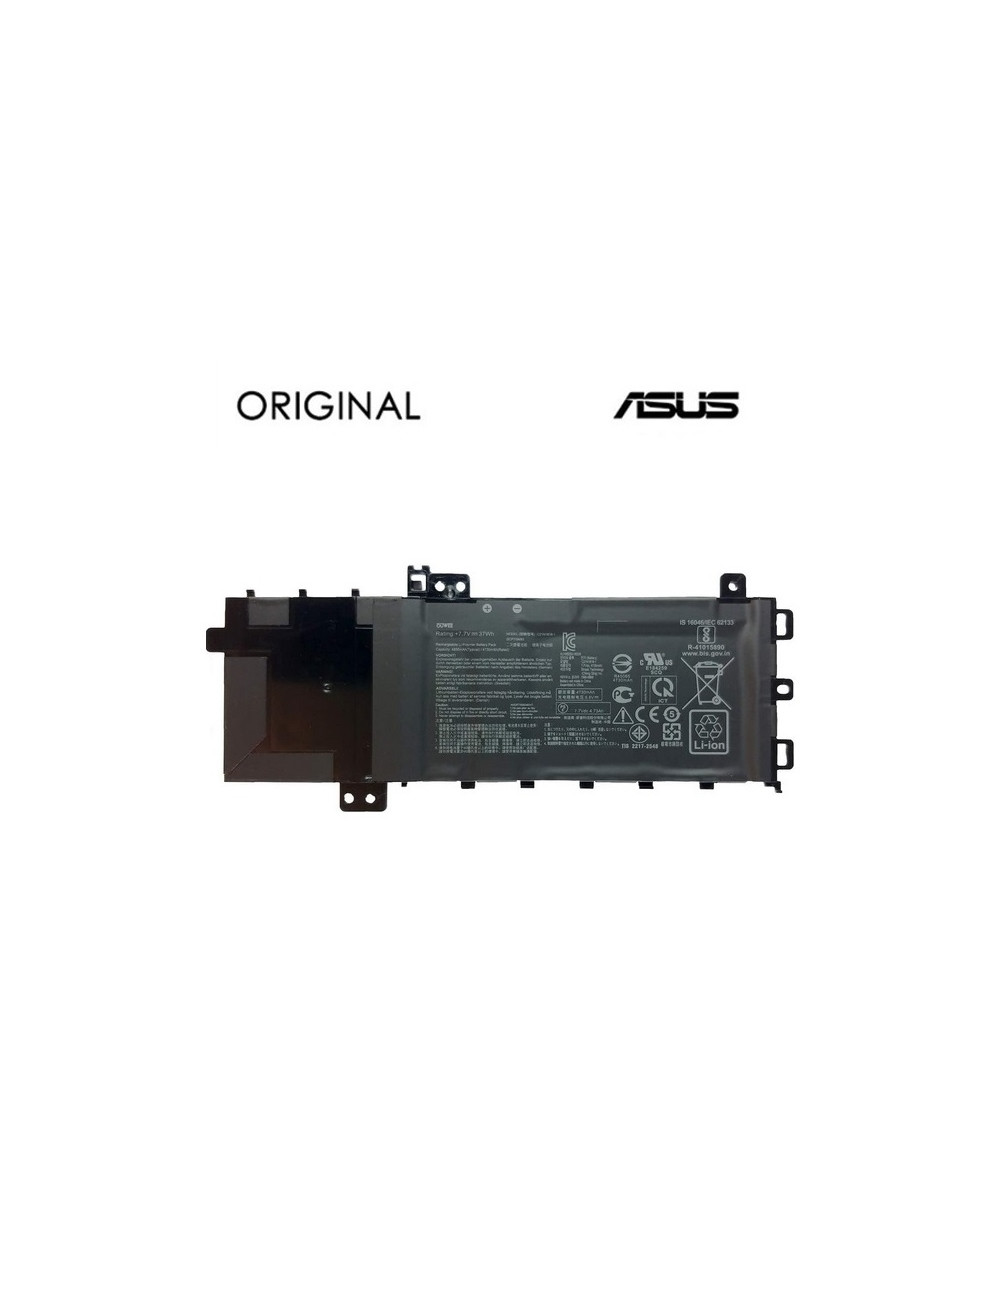 Nešiojamo kompiuterio baterija ASUS C21N1818-1, 4730mAh, Original